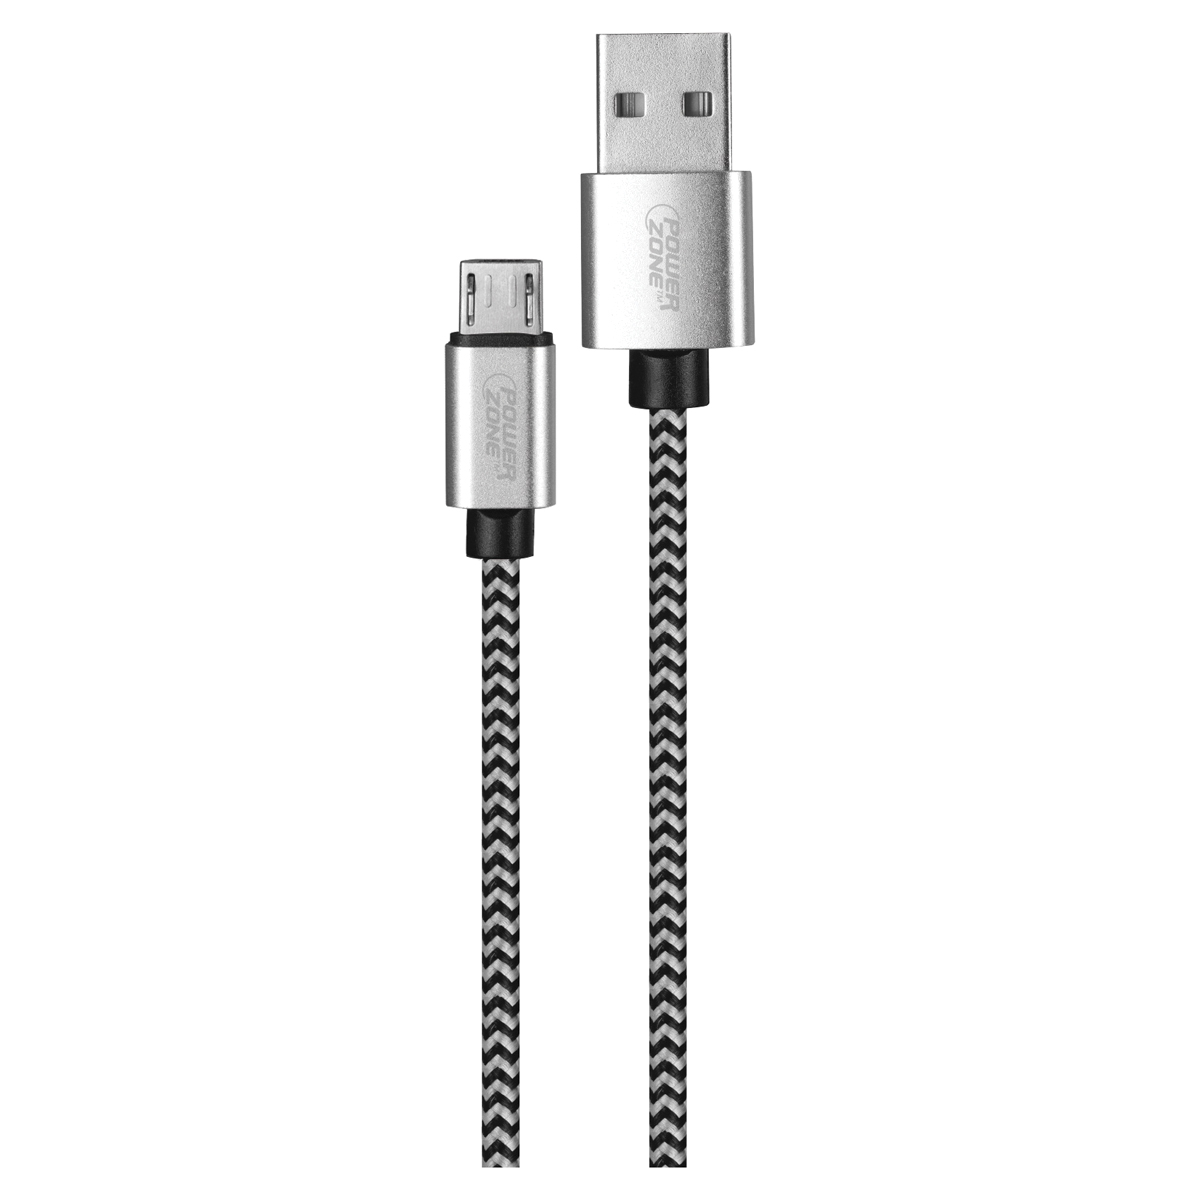 PowerZone KL-029X-2M-MICRO Micro Charging Cable, Micro USB, USB, Black/White Sheath, 6 ft L